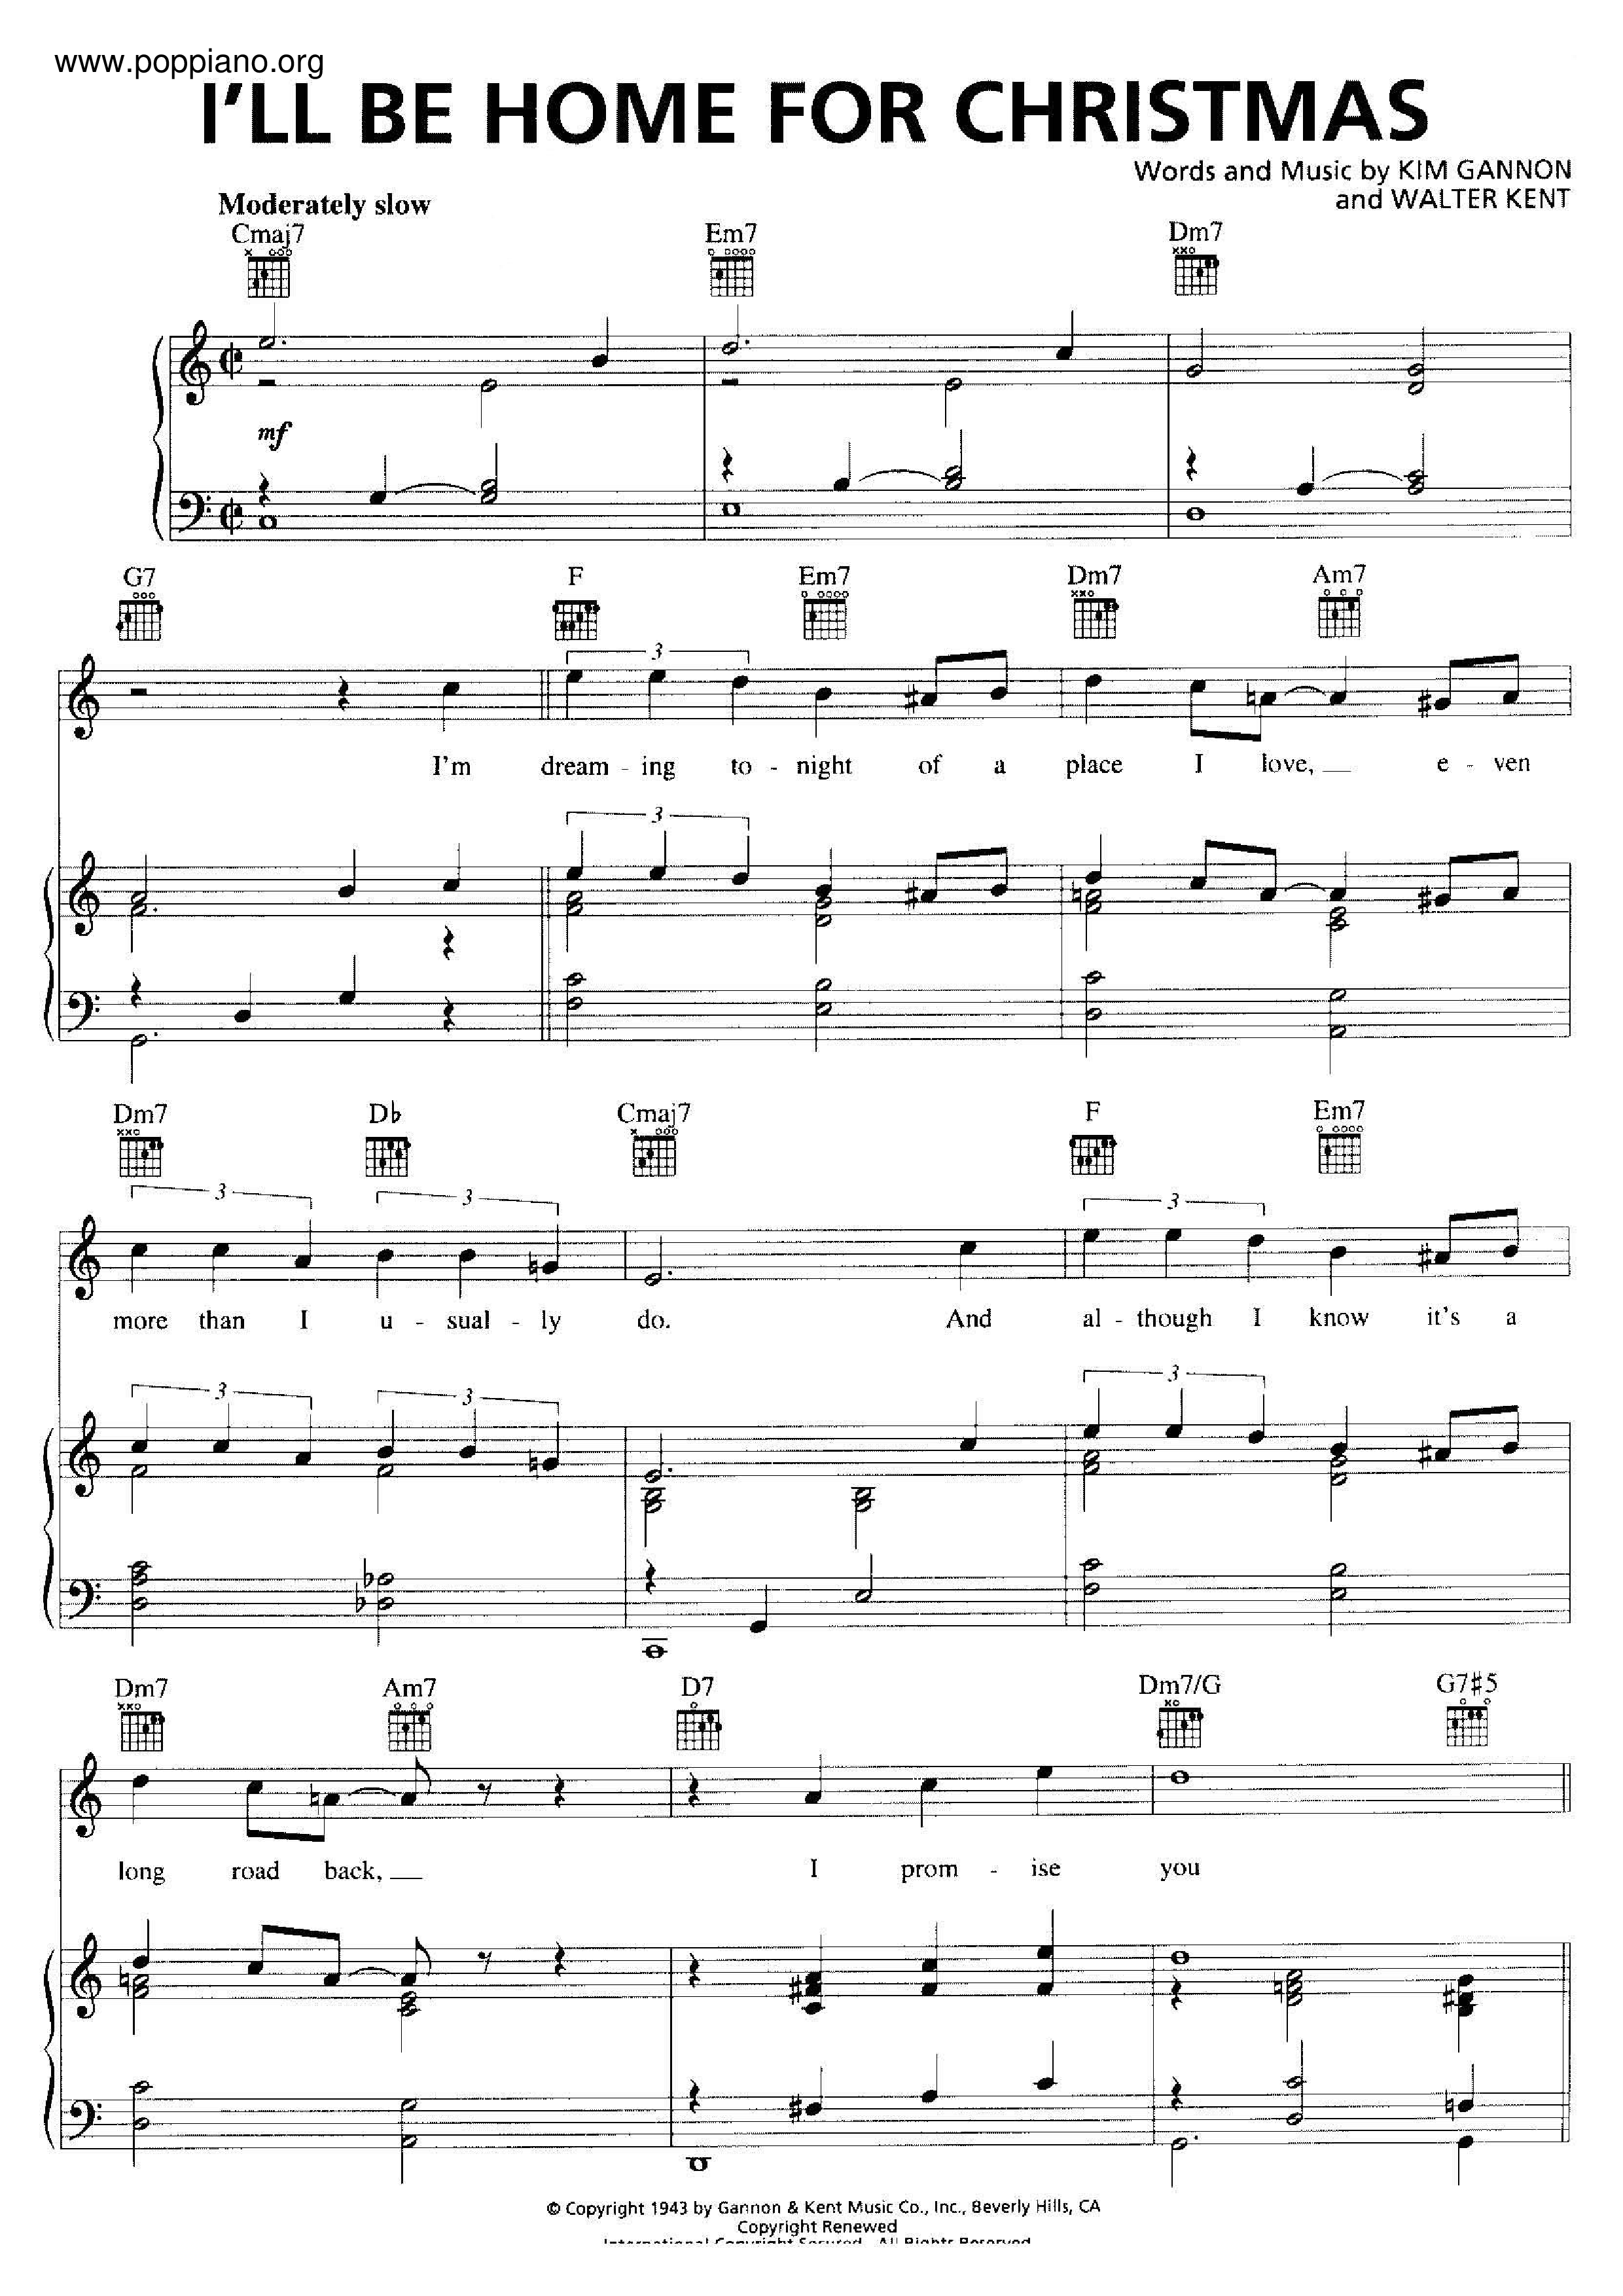 Michael Buble-I ll Be Home For Christmas Sheet Music pdf